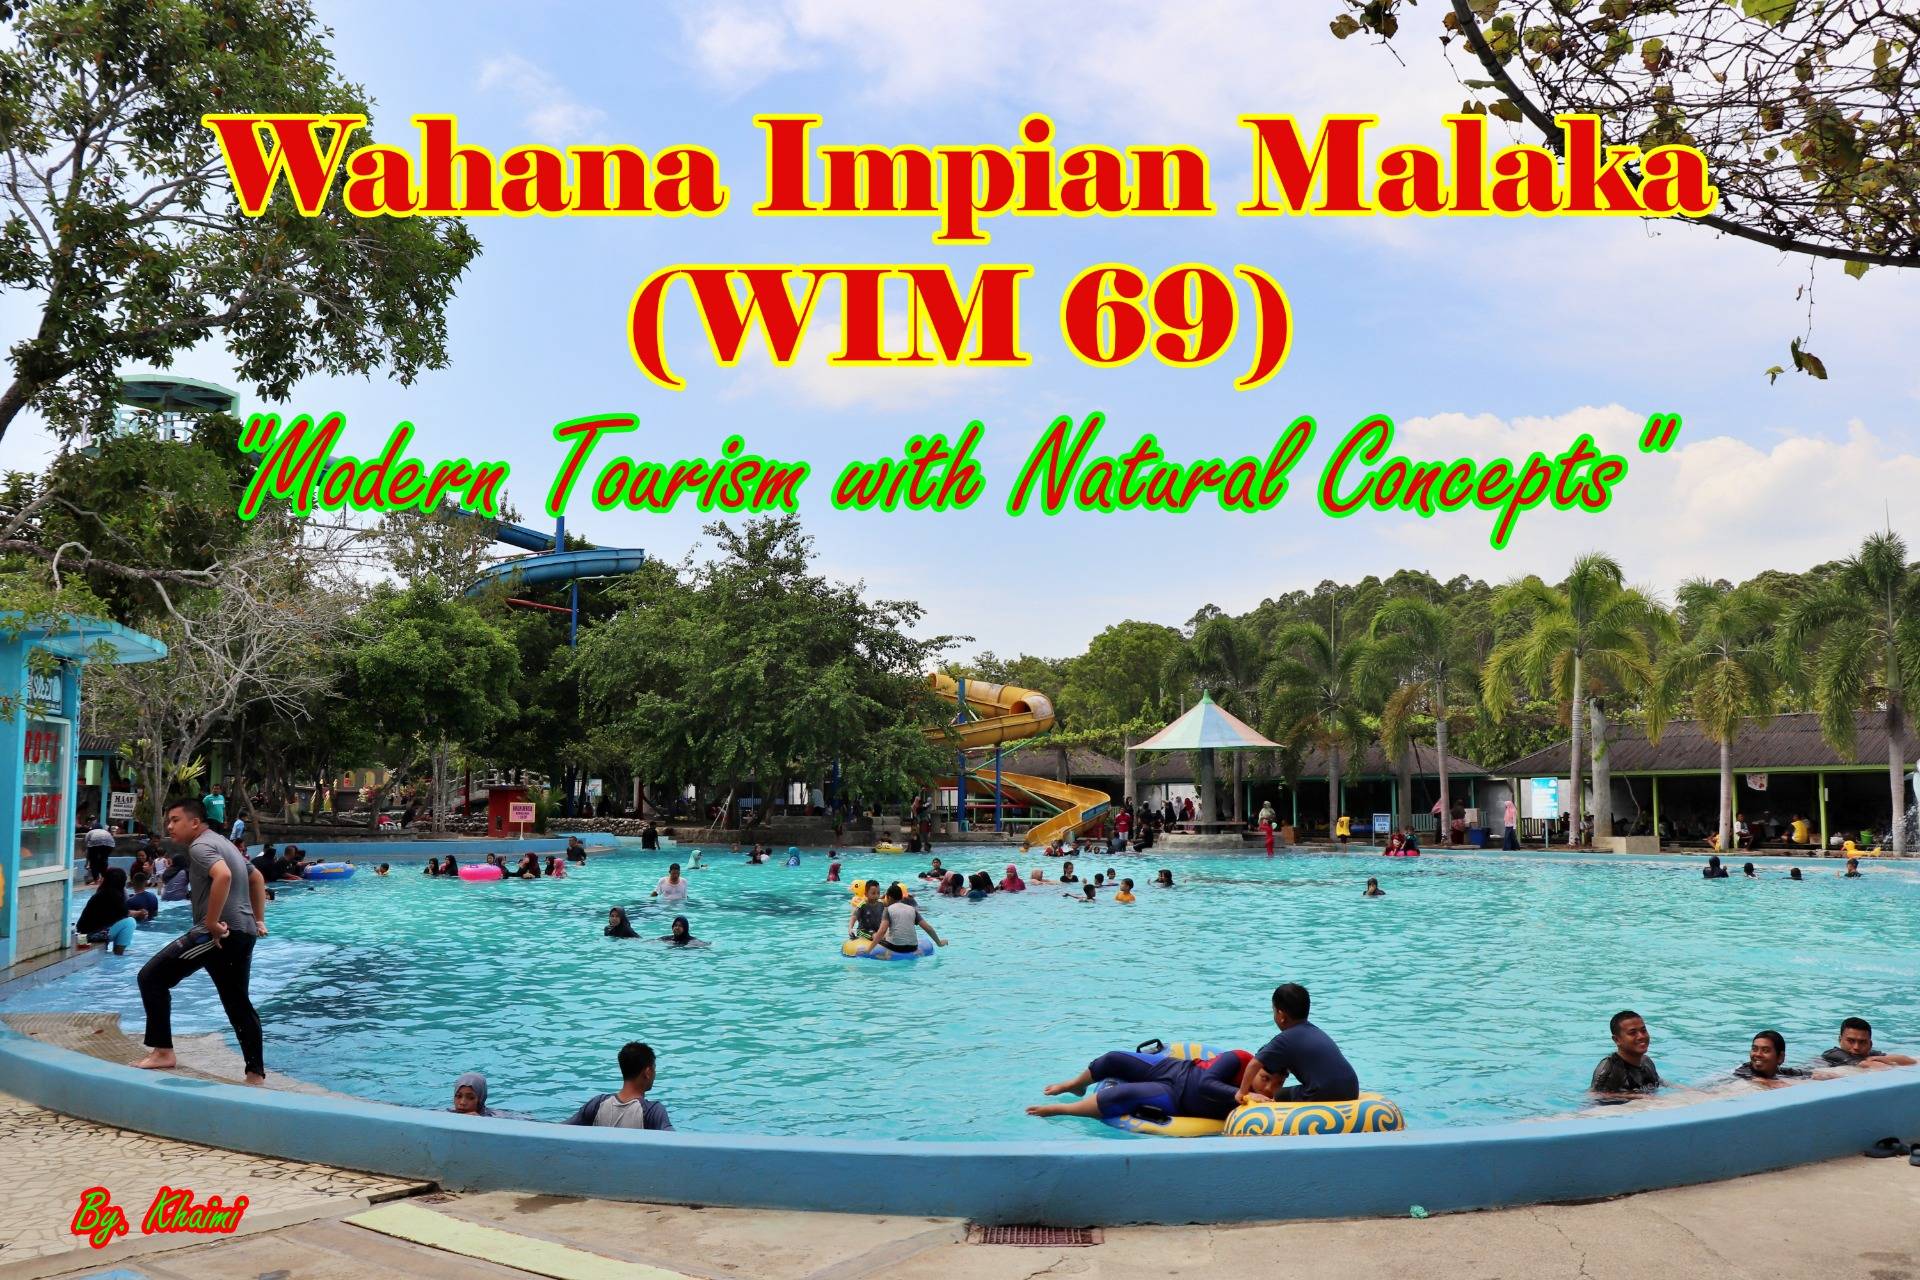 [PW#10] Kuta Malaka WIM 69 : Modern Tourism with Natural Concepts